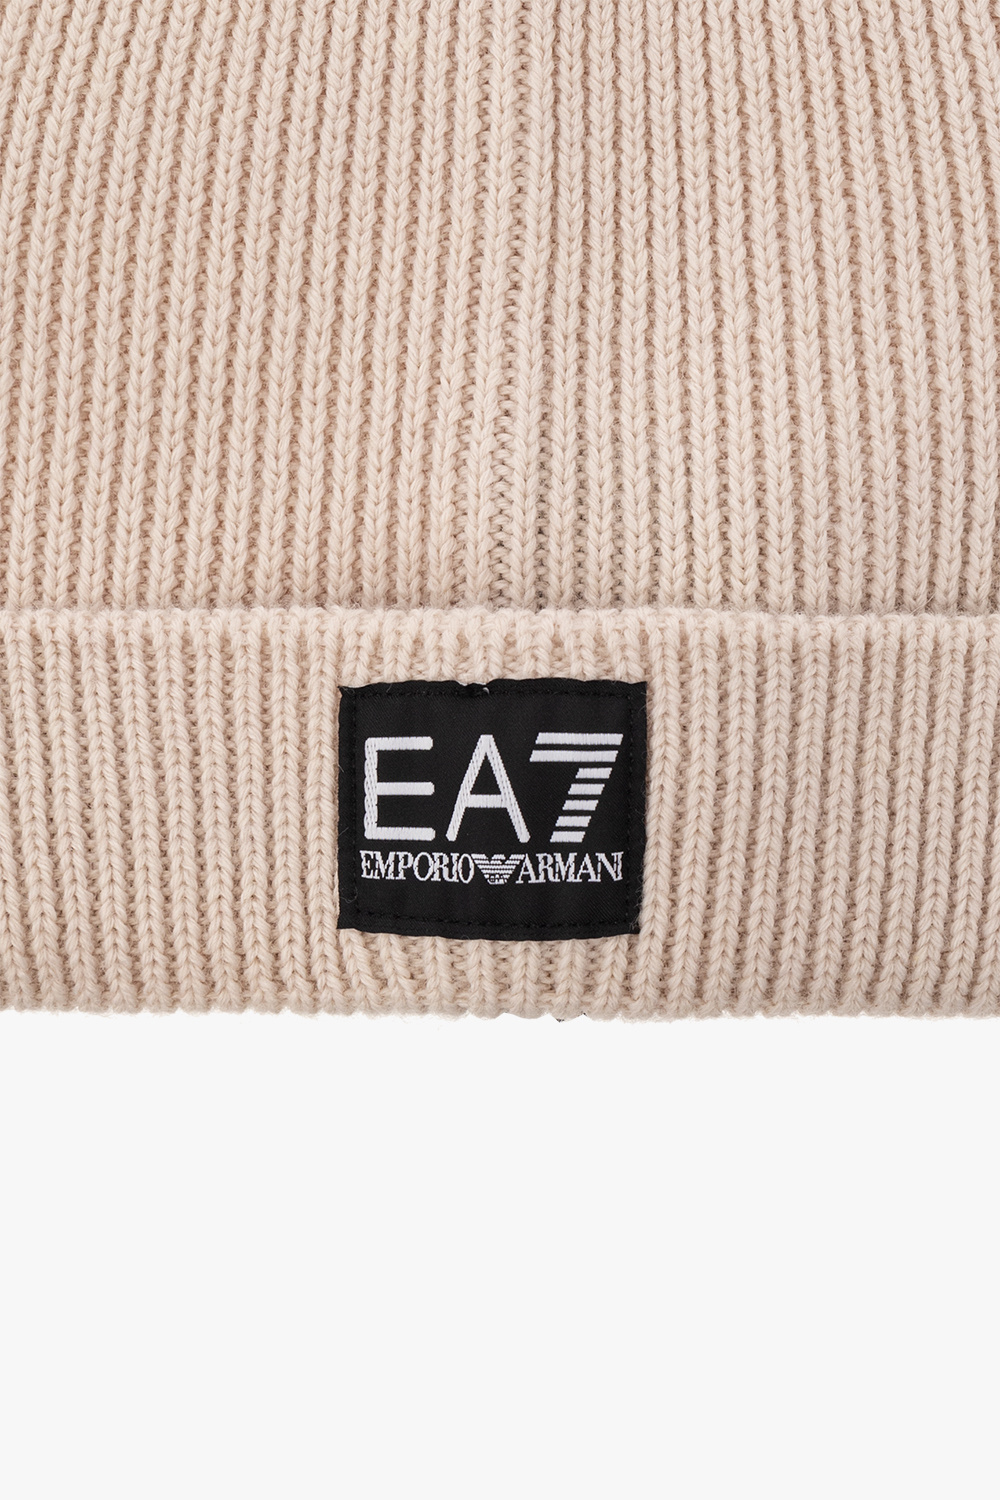 EA7 Emporio armani bett Beanie with logo